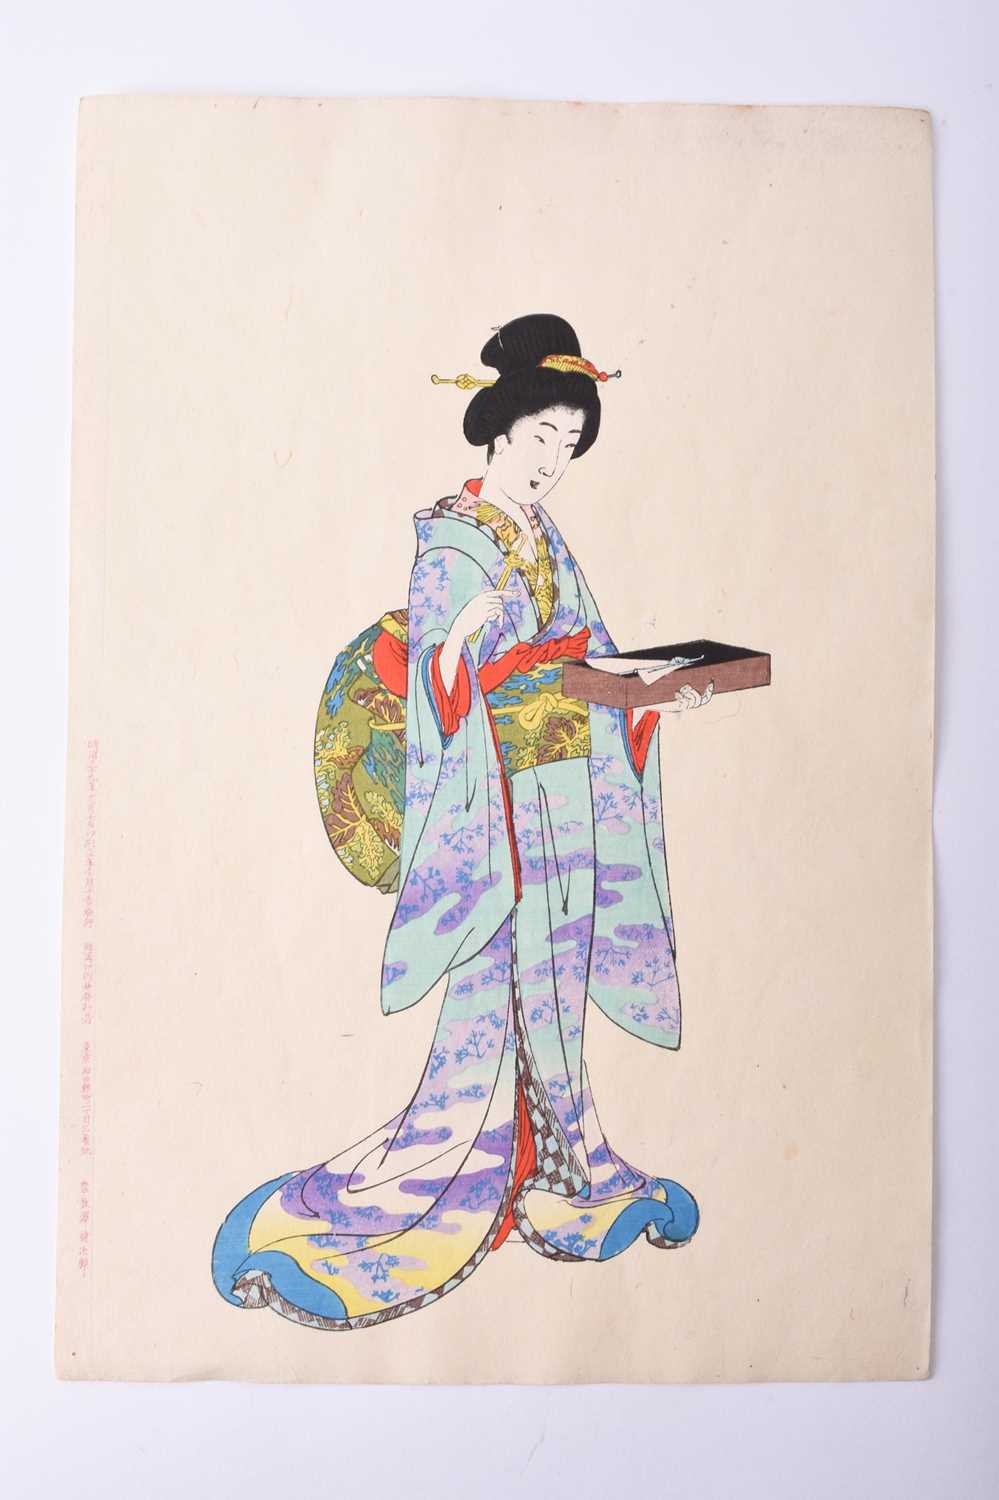 Toyohara Chikanobu (1838-1912), a collection of twelve woodblock prints